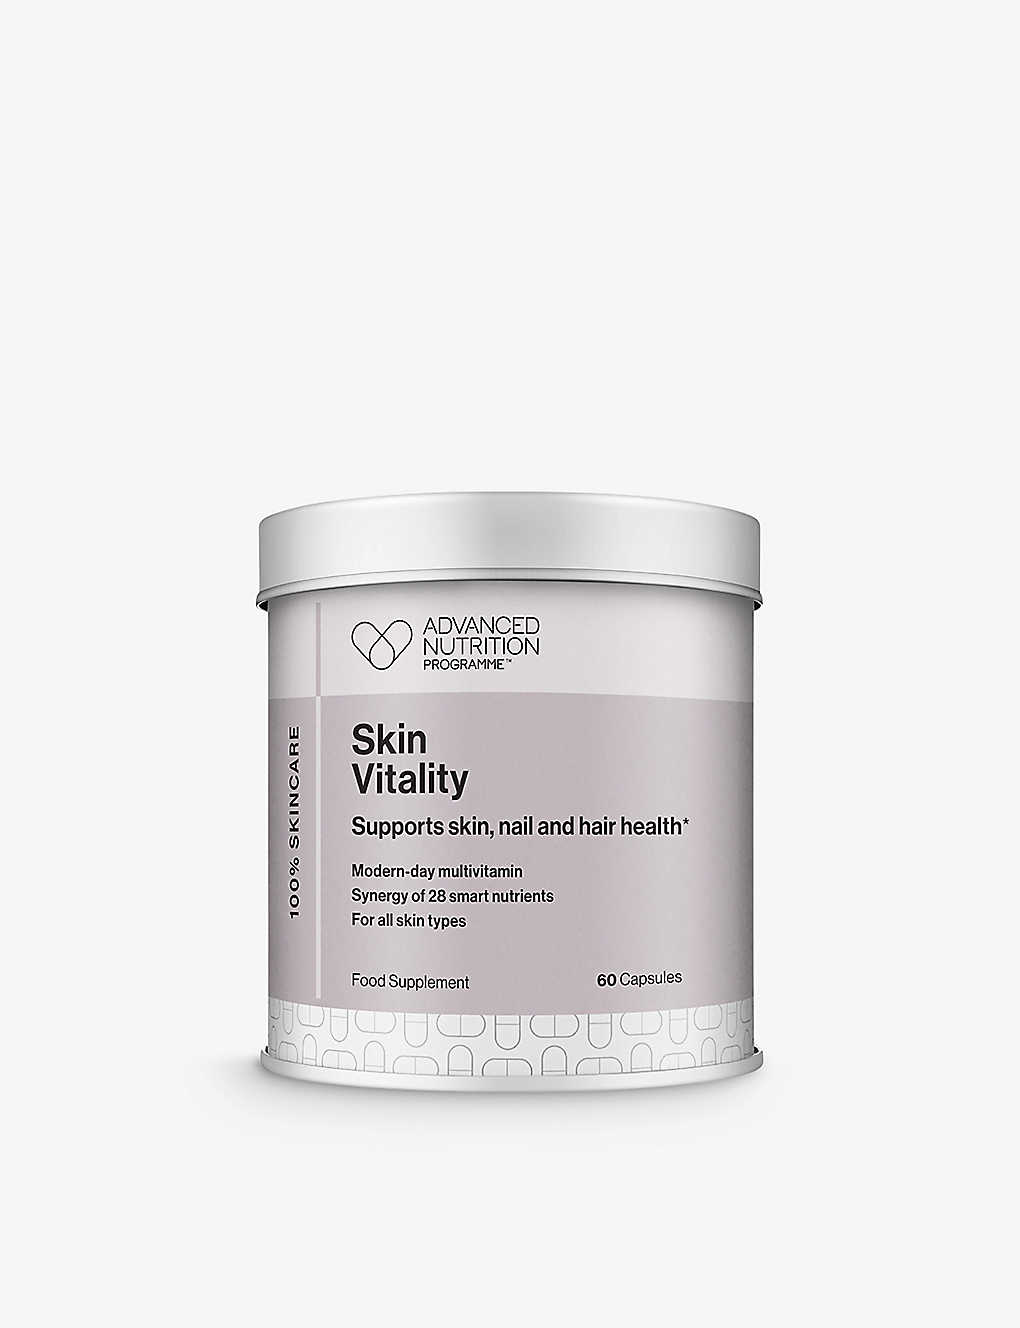 Advanced Nutrition Programme Skin Vitality Supplement 60 Capsules